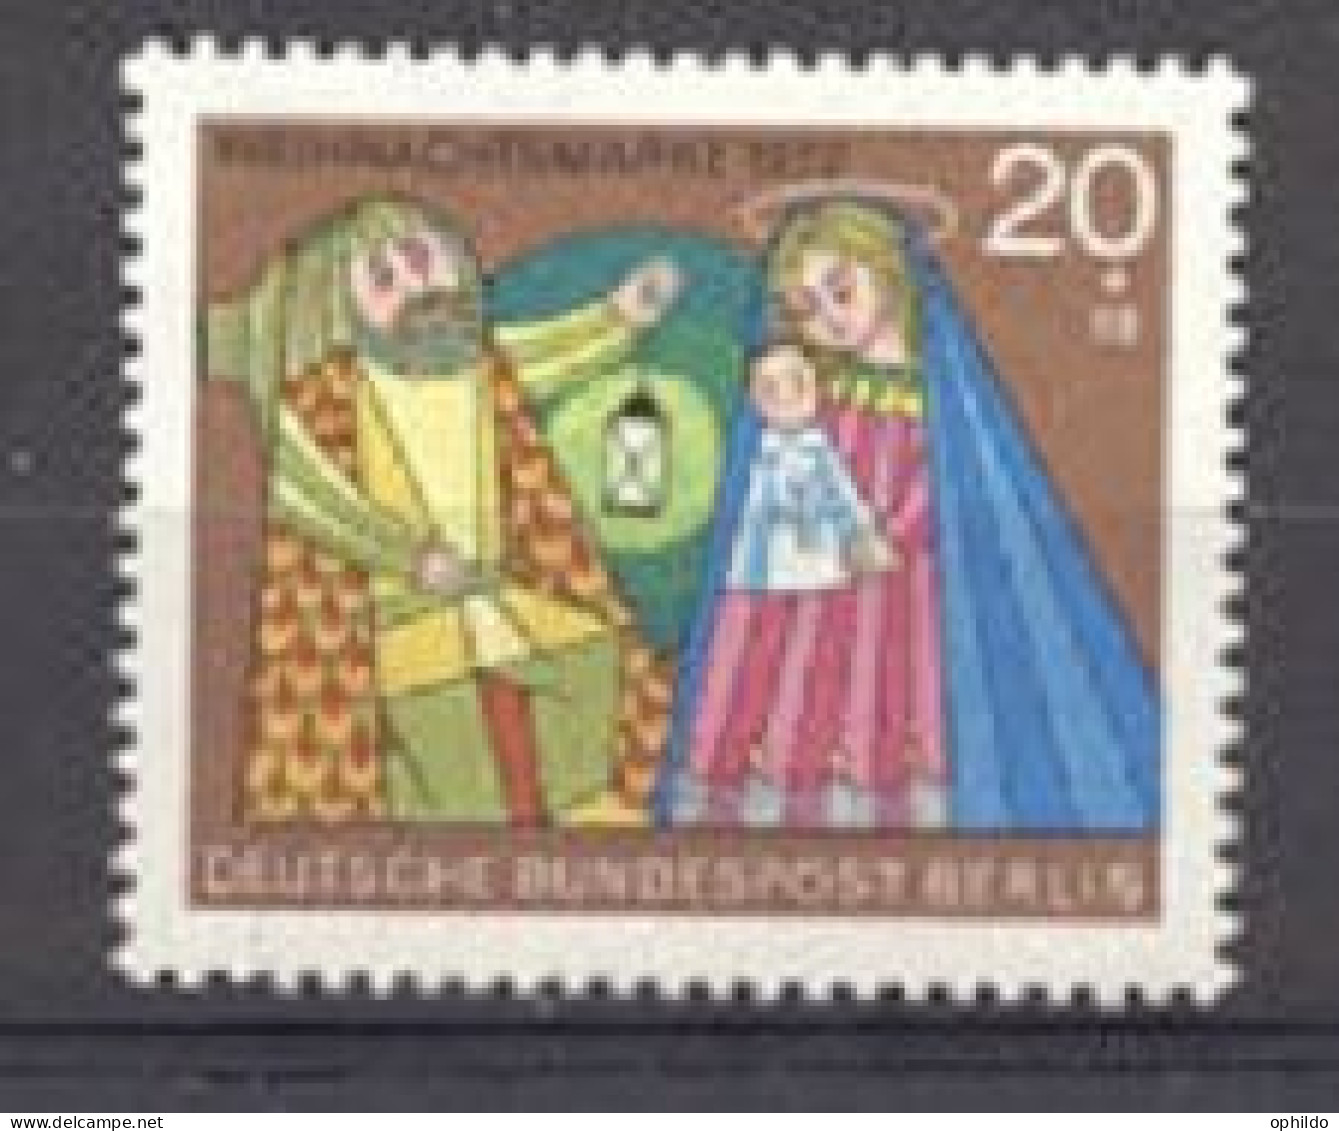 Berlin  405 * *  TB   - Unused Stamps